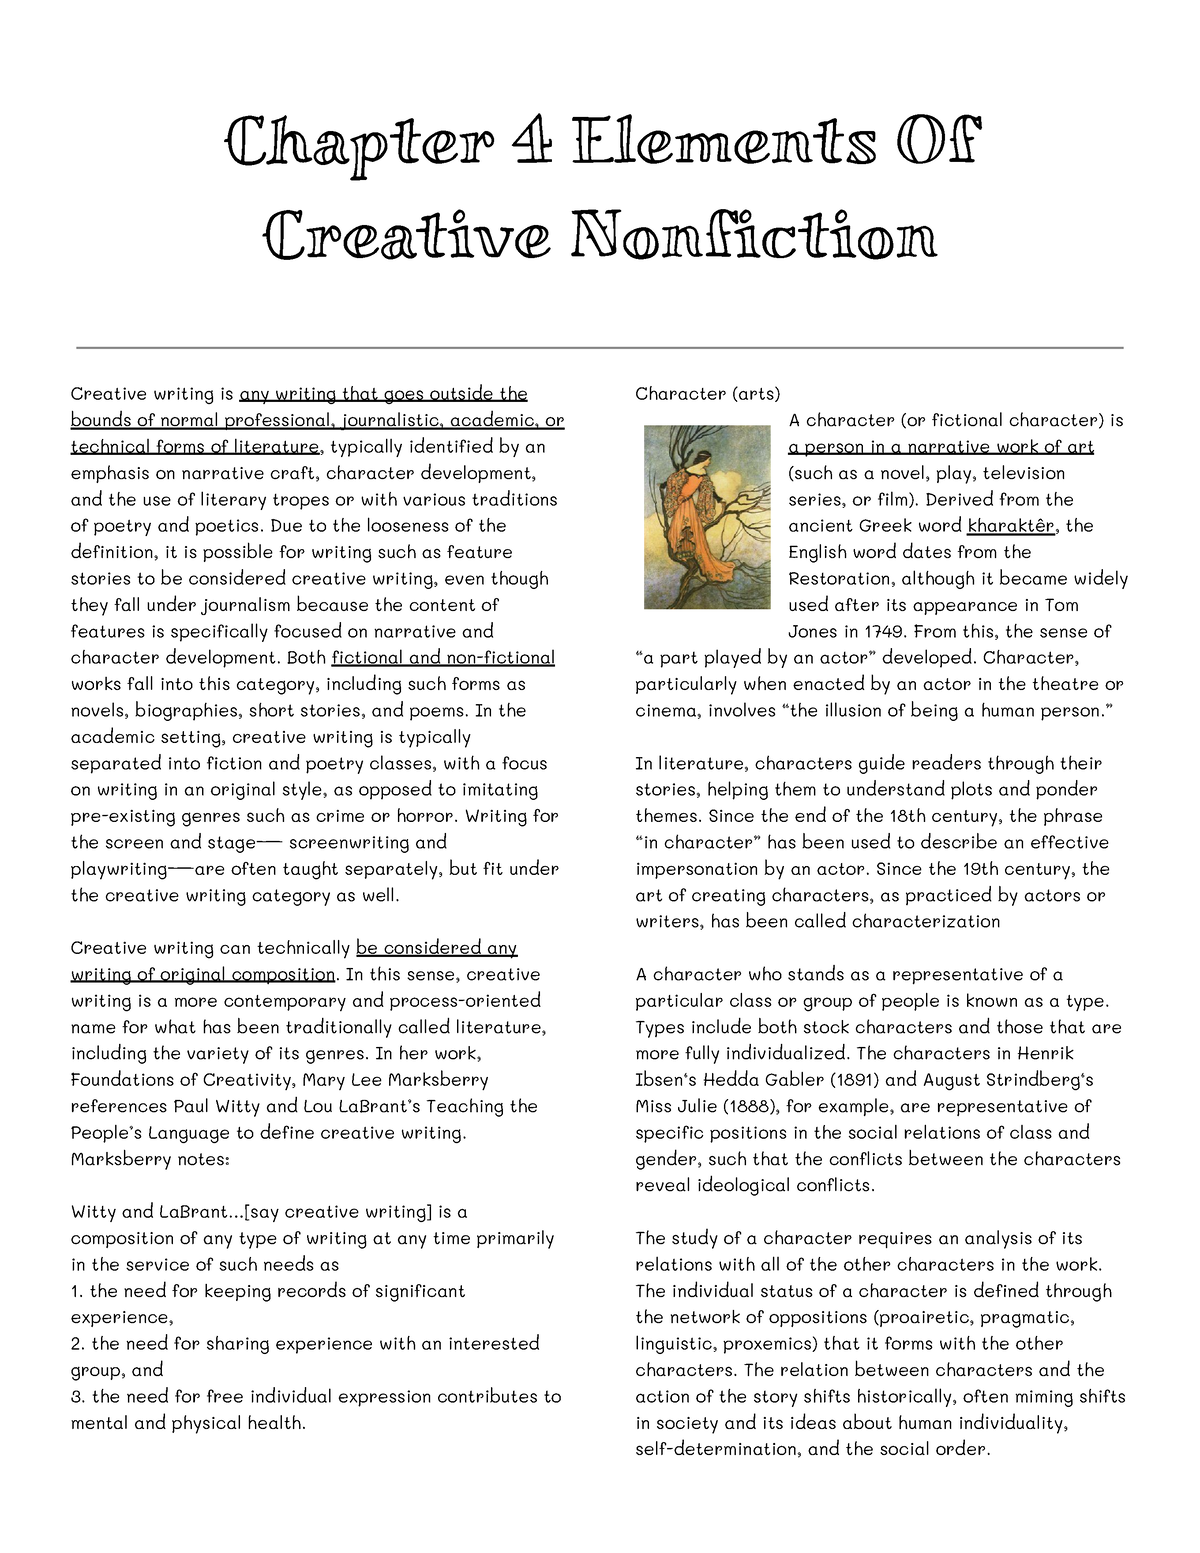 reflection essay creative nonfiction